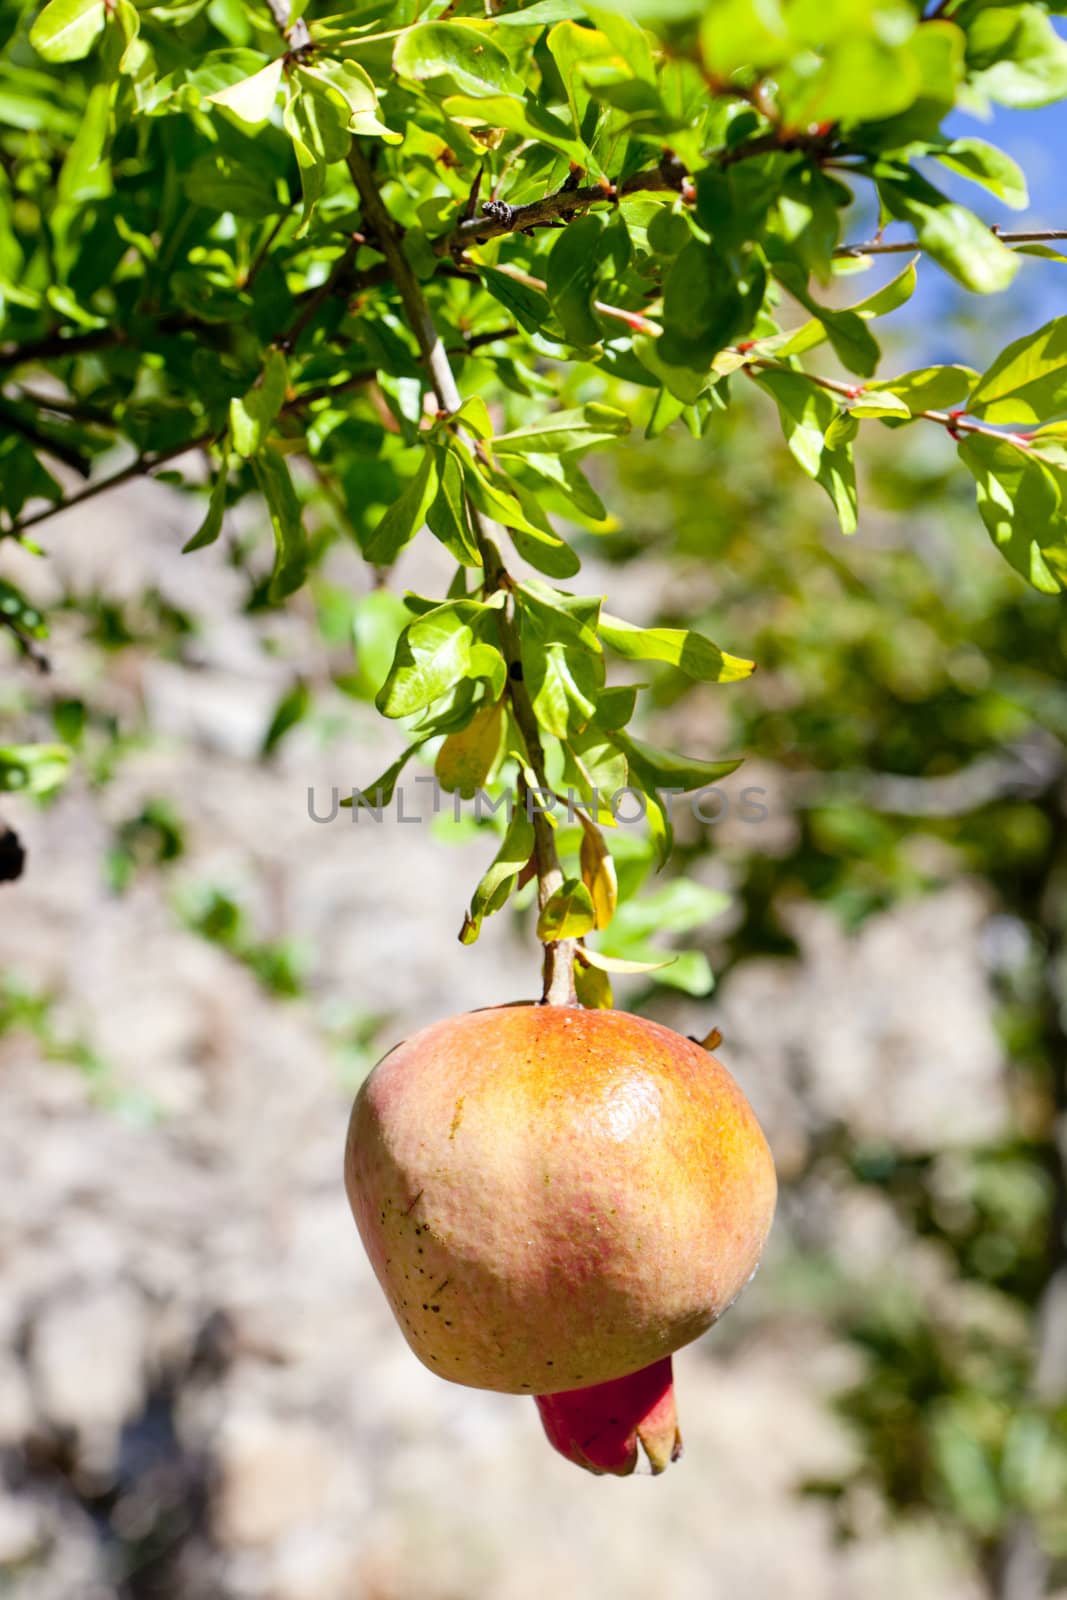 pomegranate, Portugal by phbcz